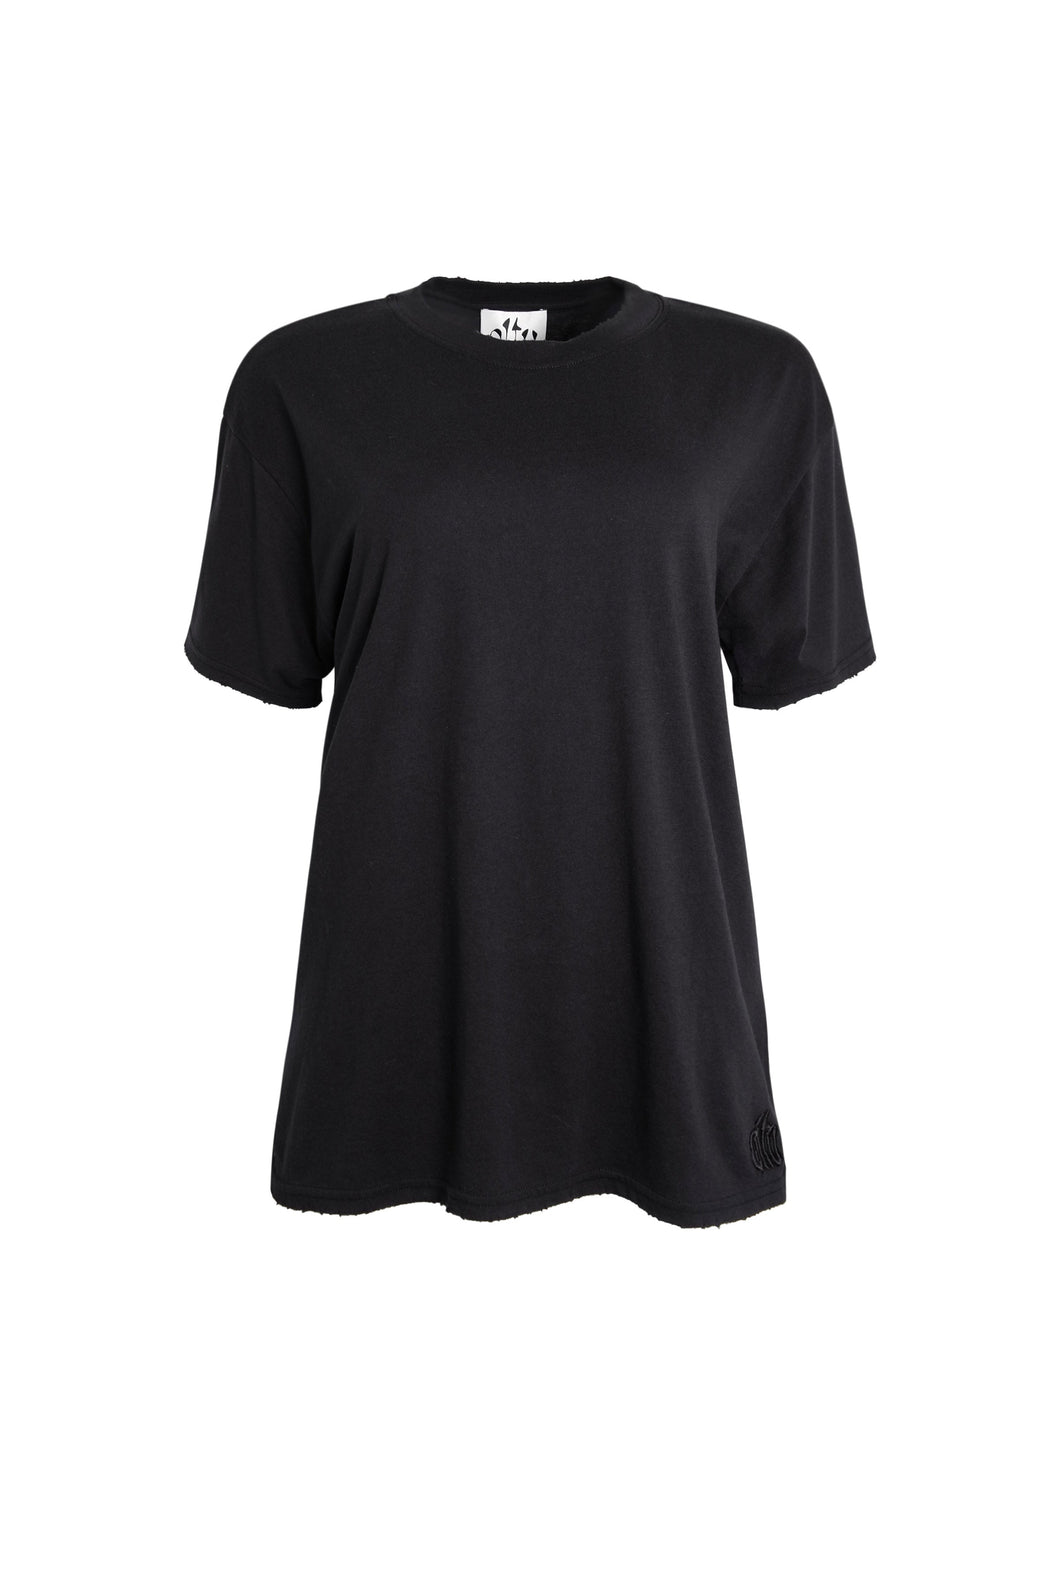 Altuzarra_Distressed T Shirt-Black